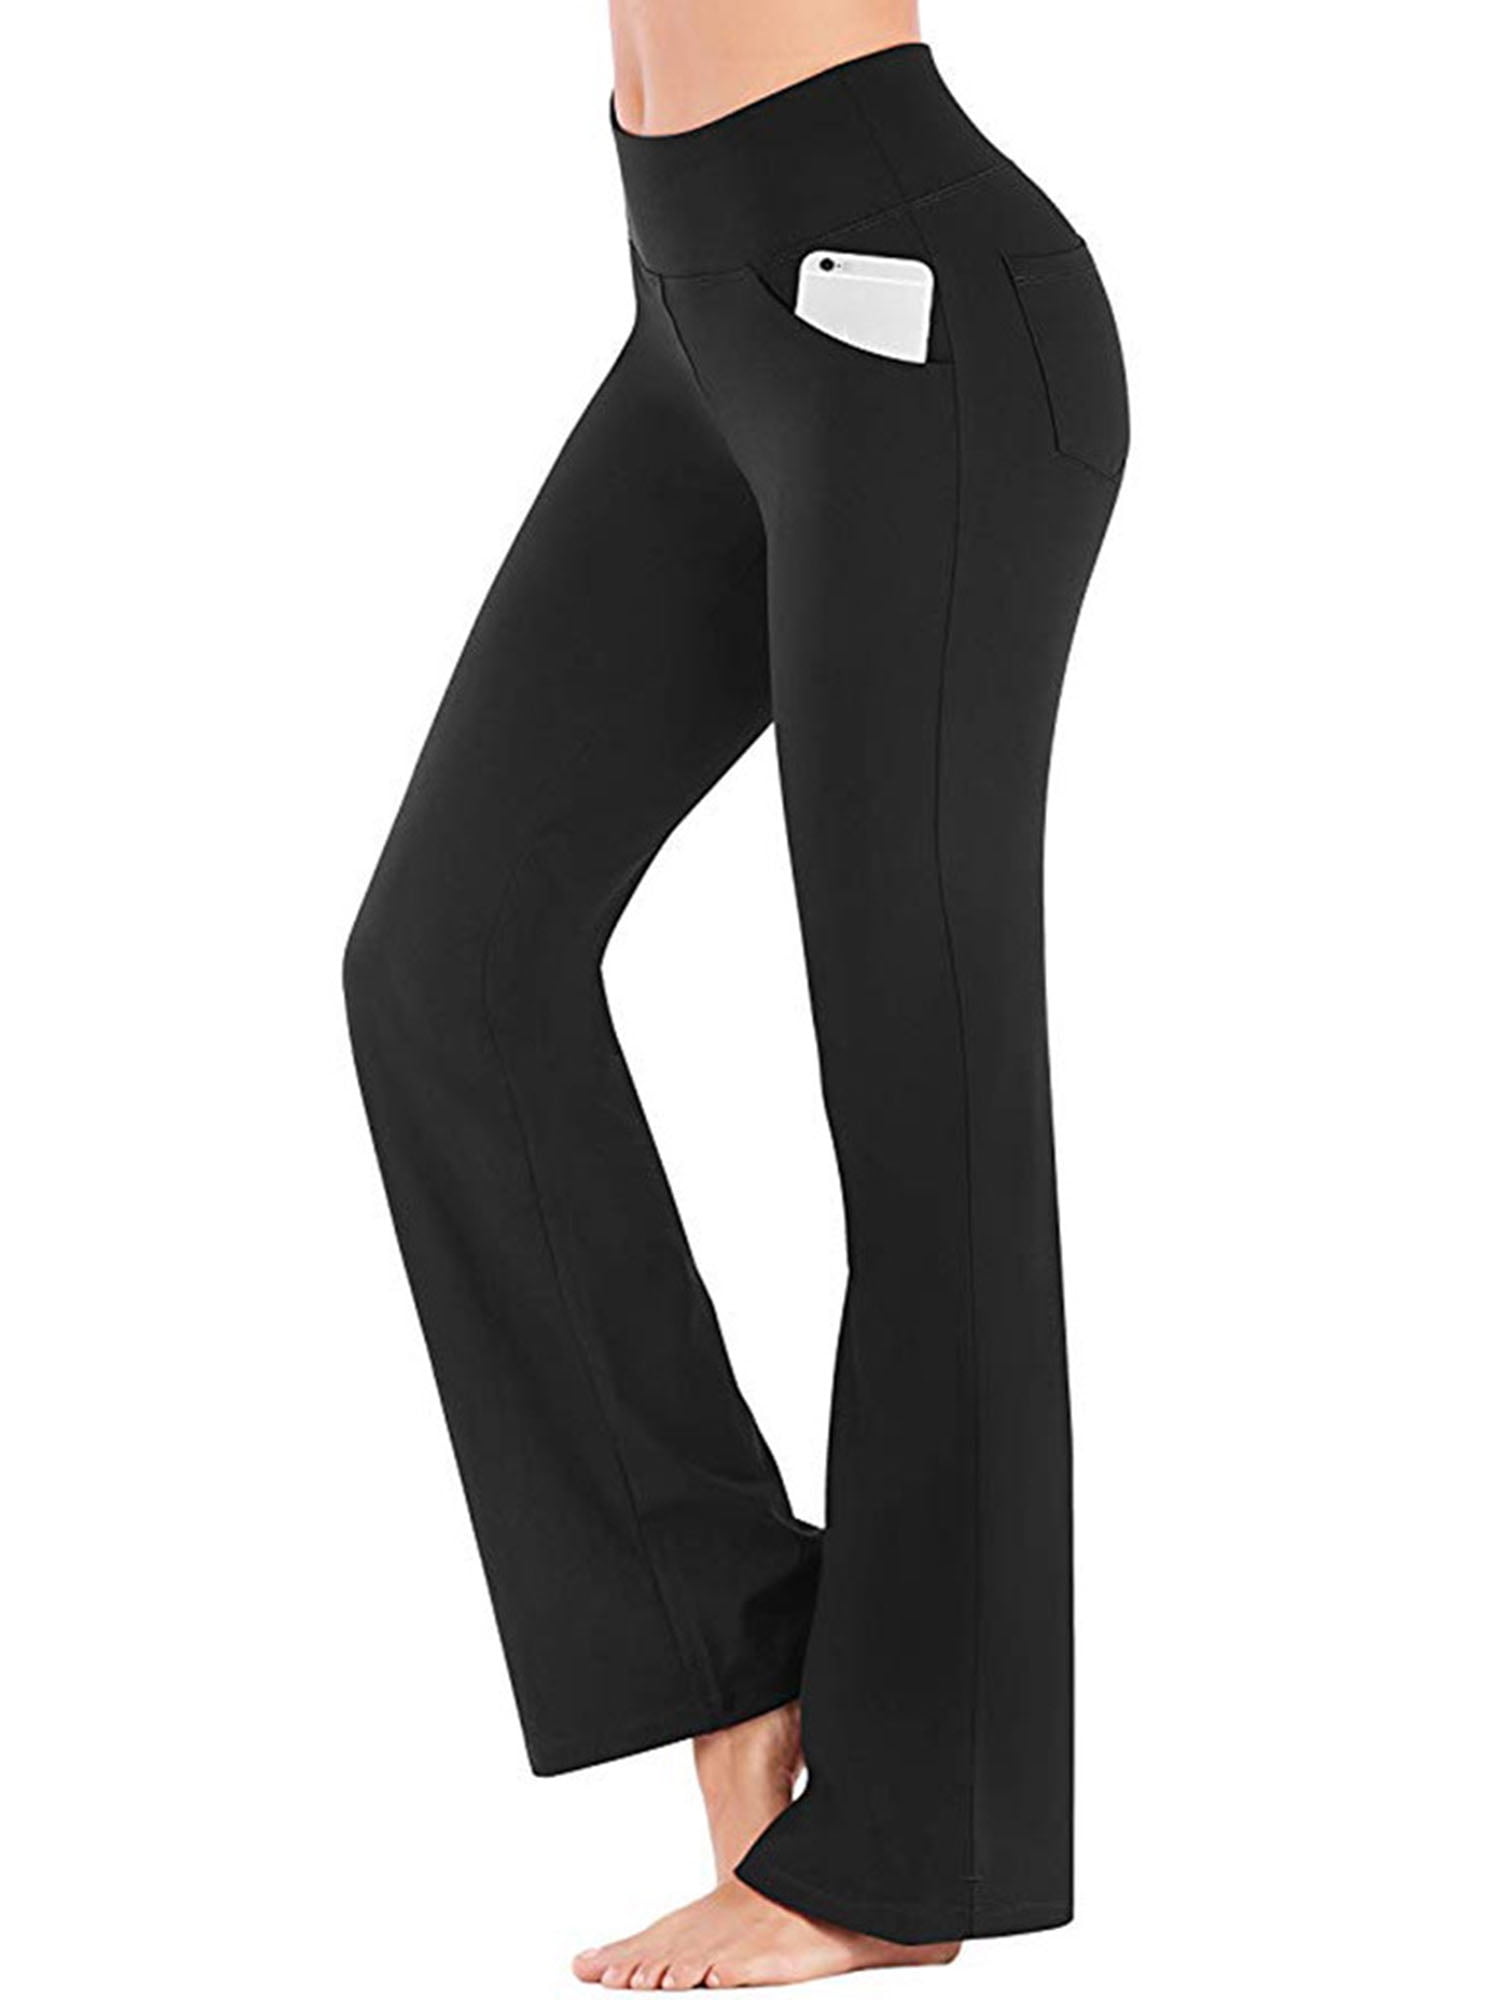 Avamo Activewear Straight Yoga Pants for Women High Waist Active